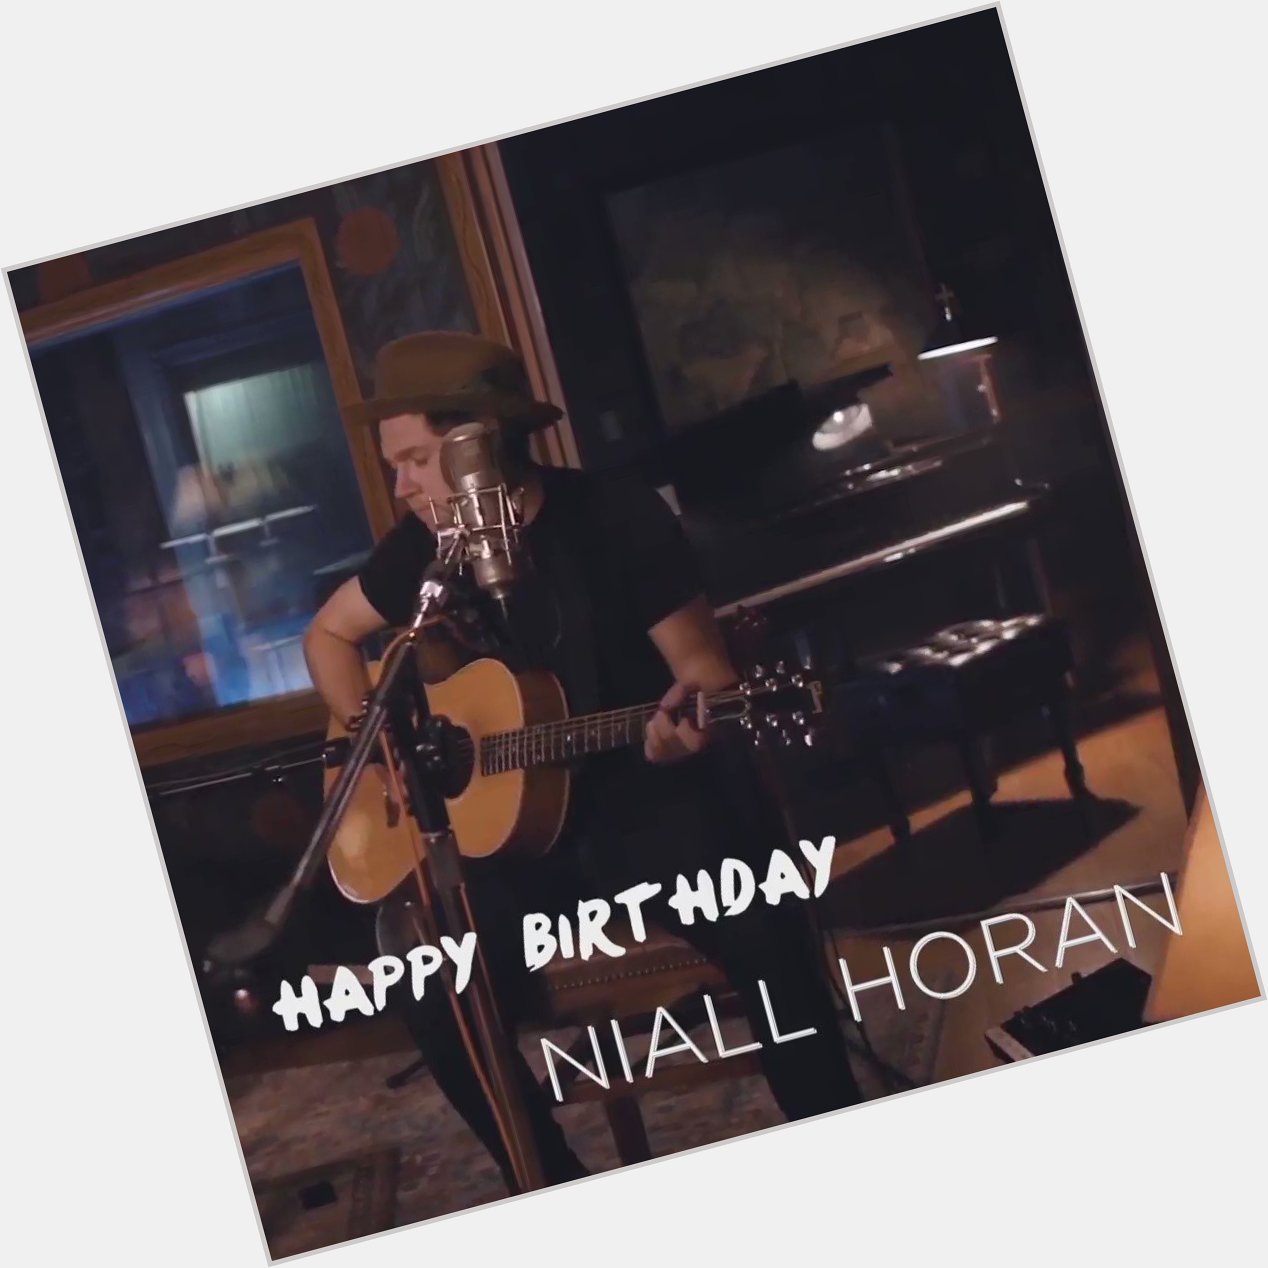  Niall Horan turns 24 Happy Birthday,  